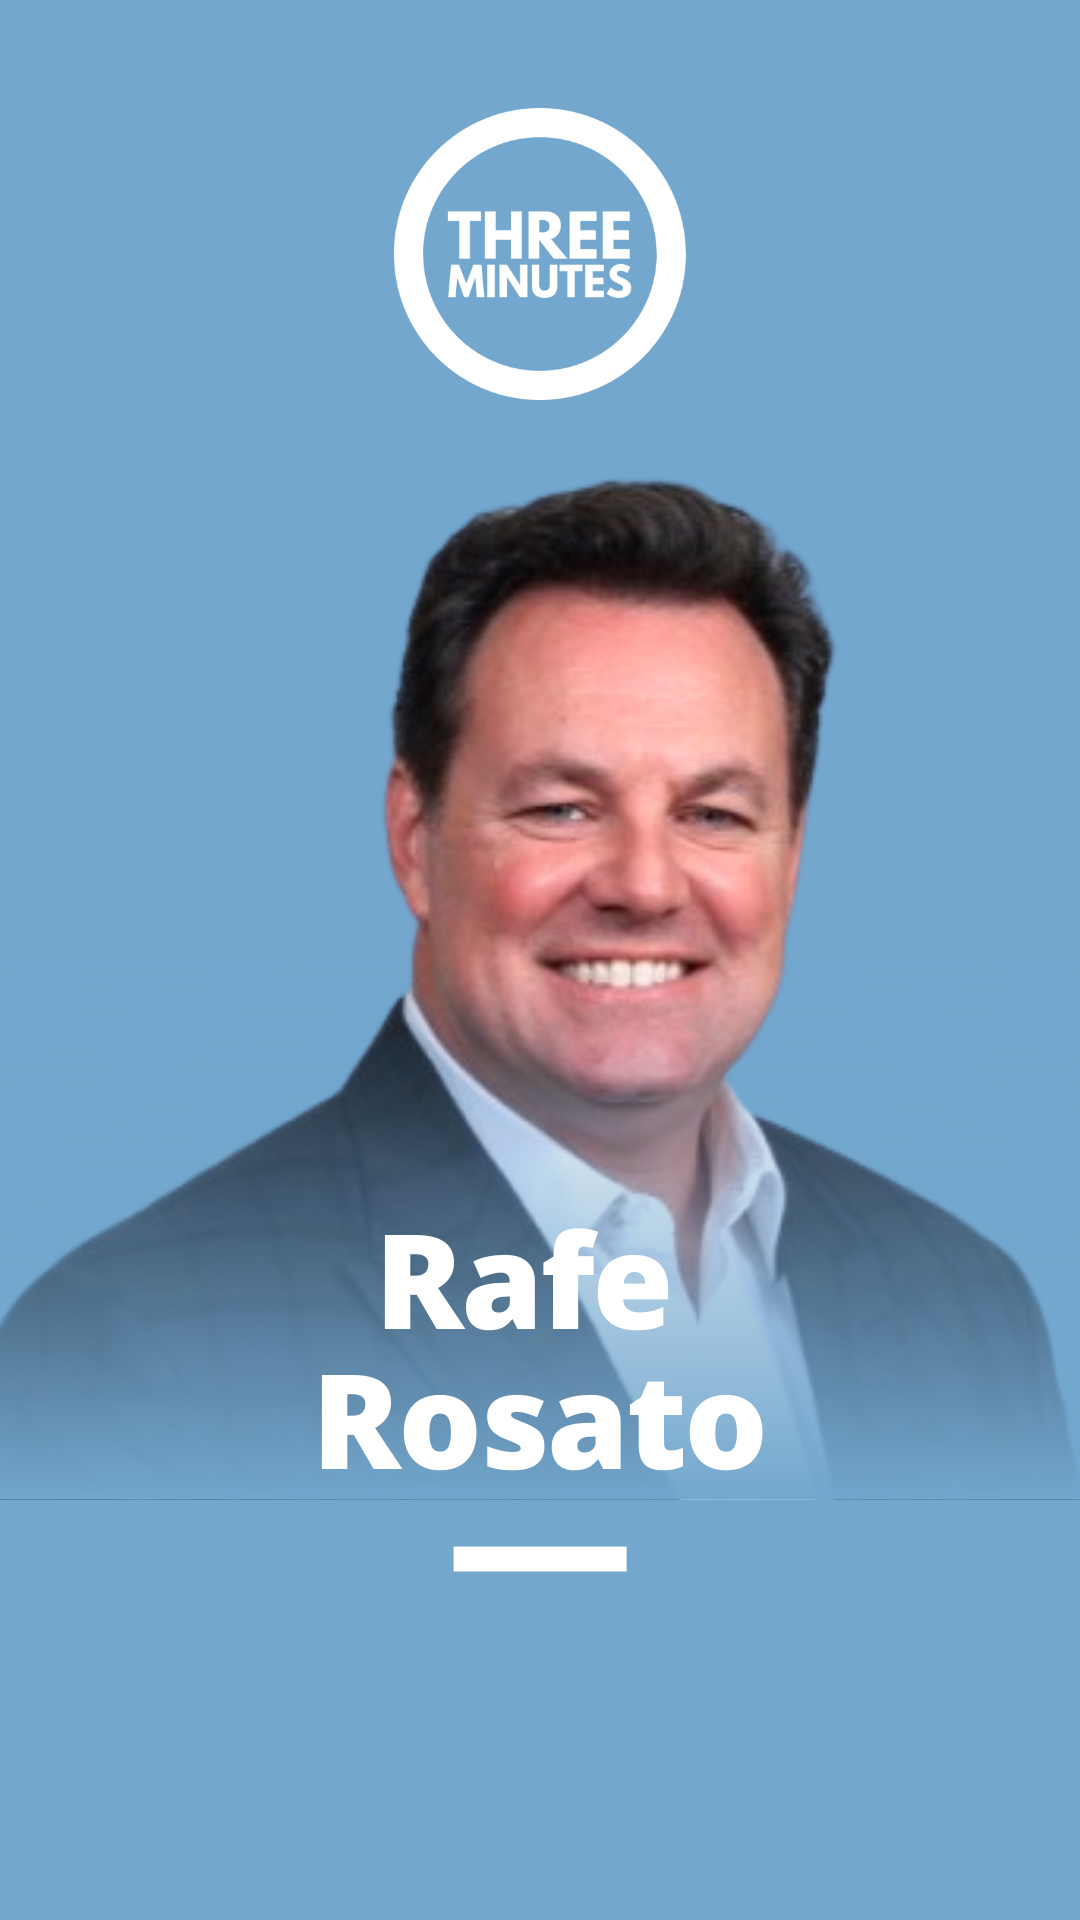 Rafe Rosato